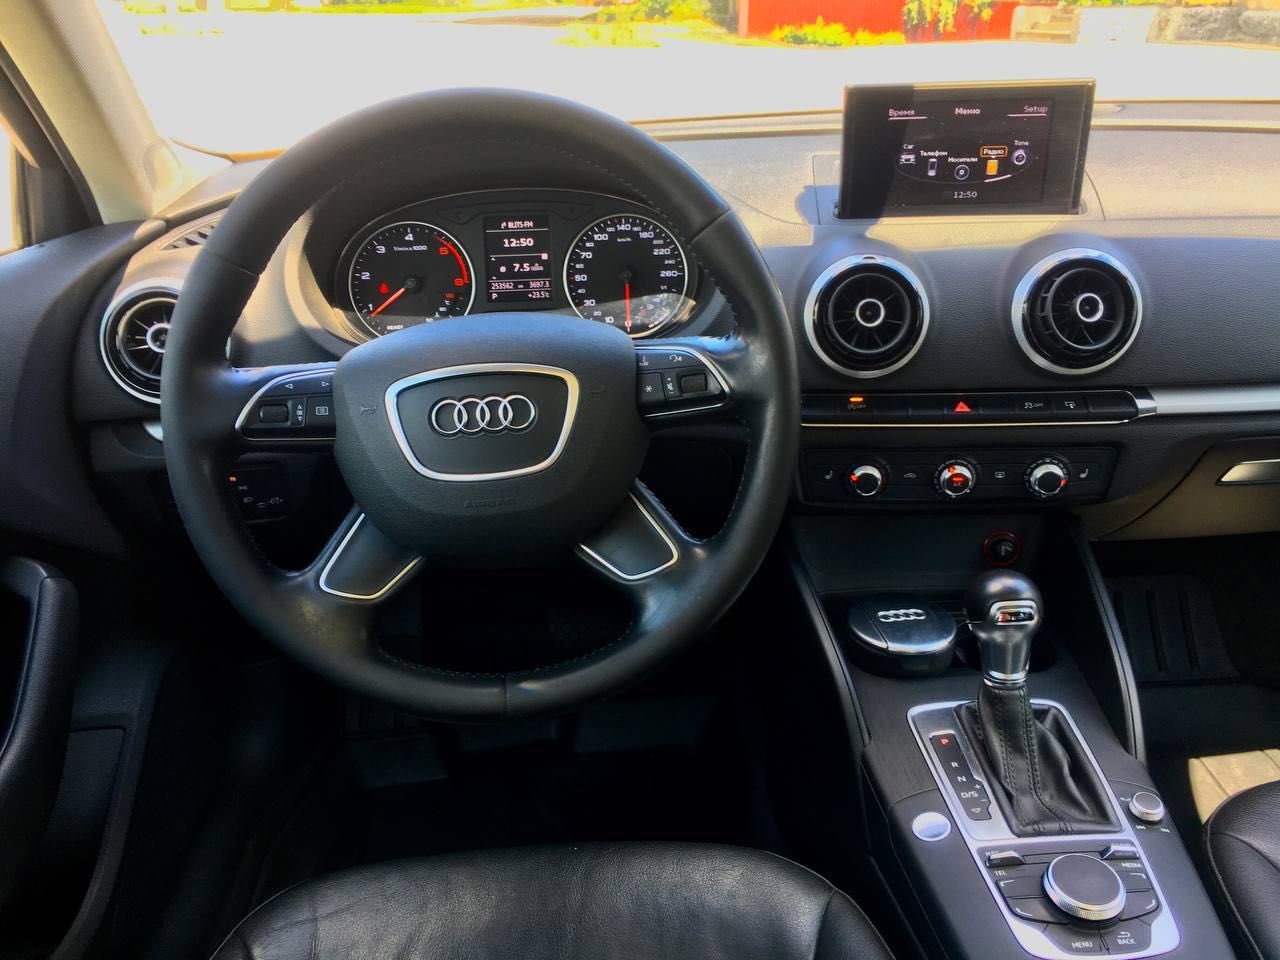 Audi a3 1.6 TDI automatic